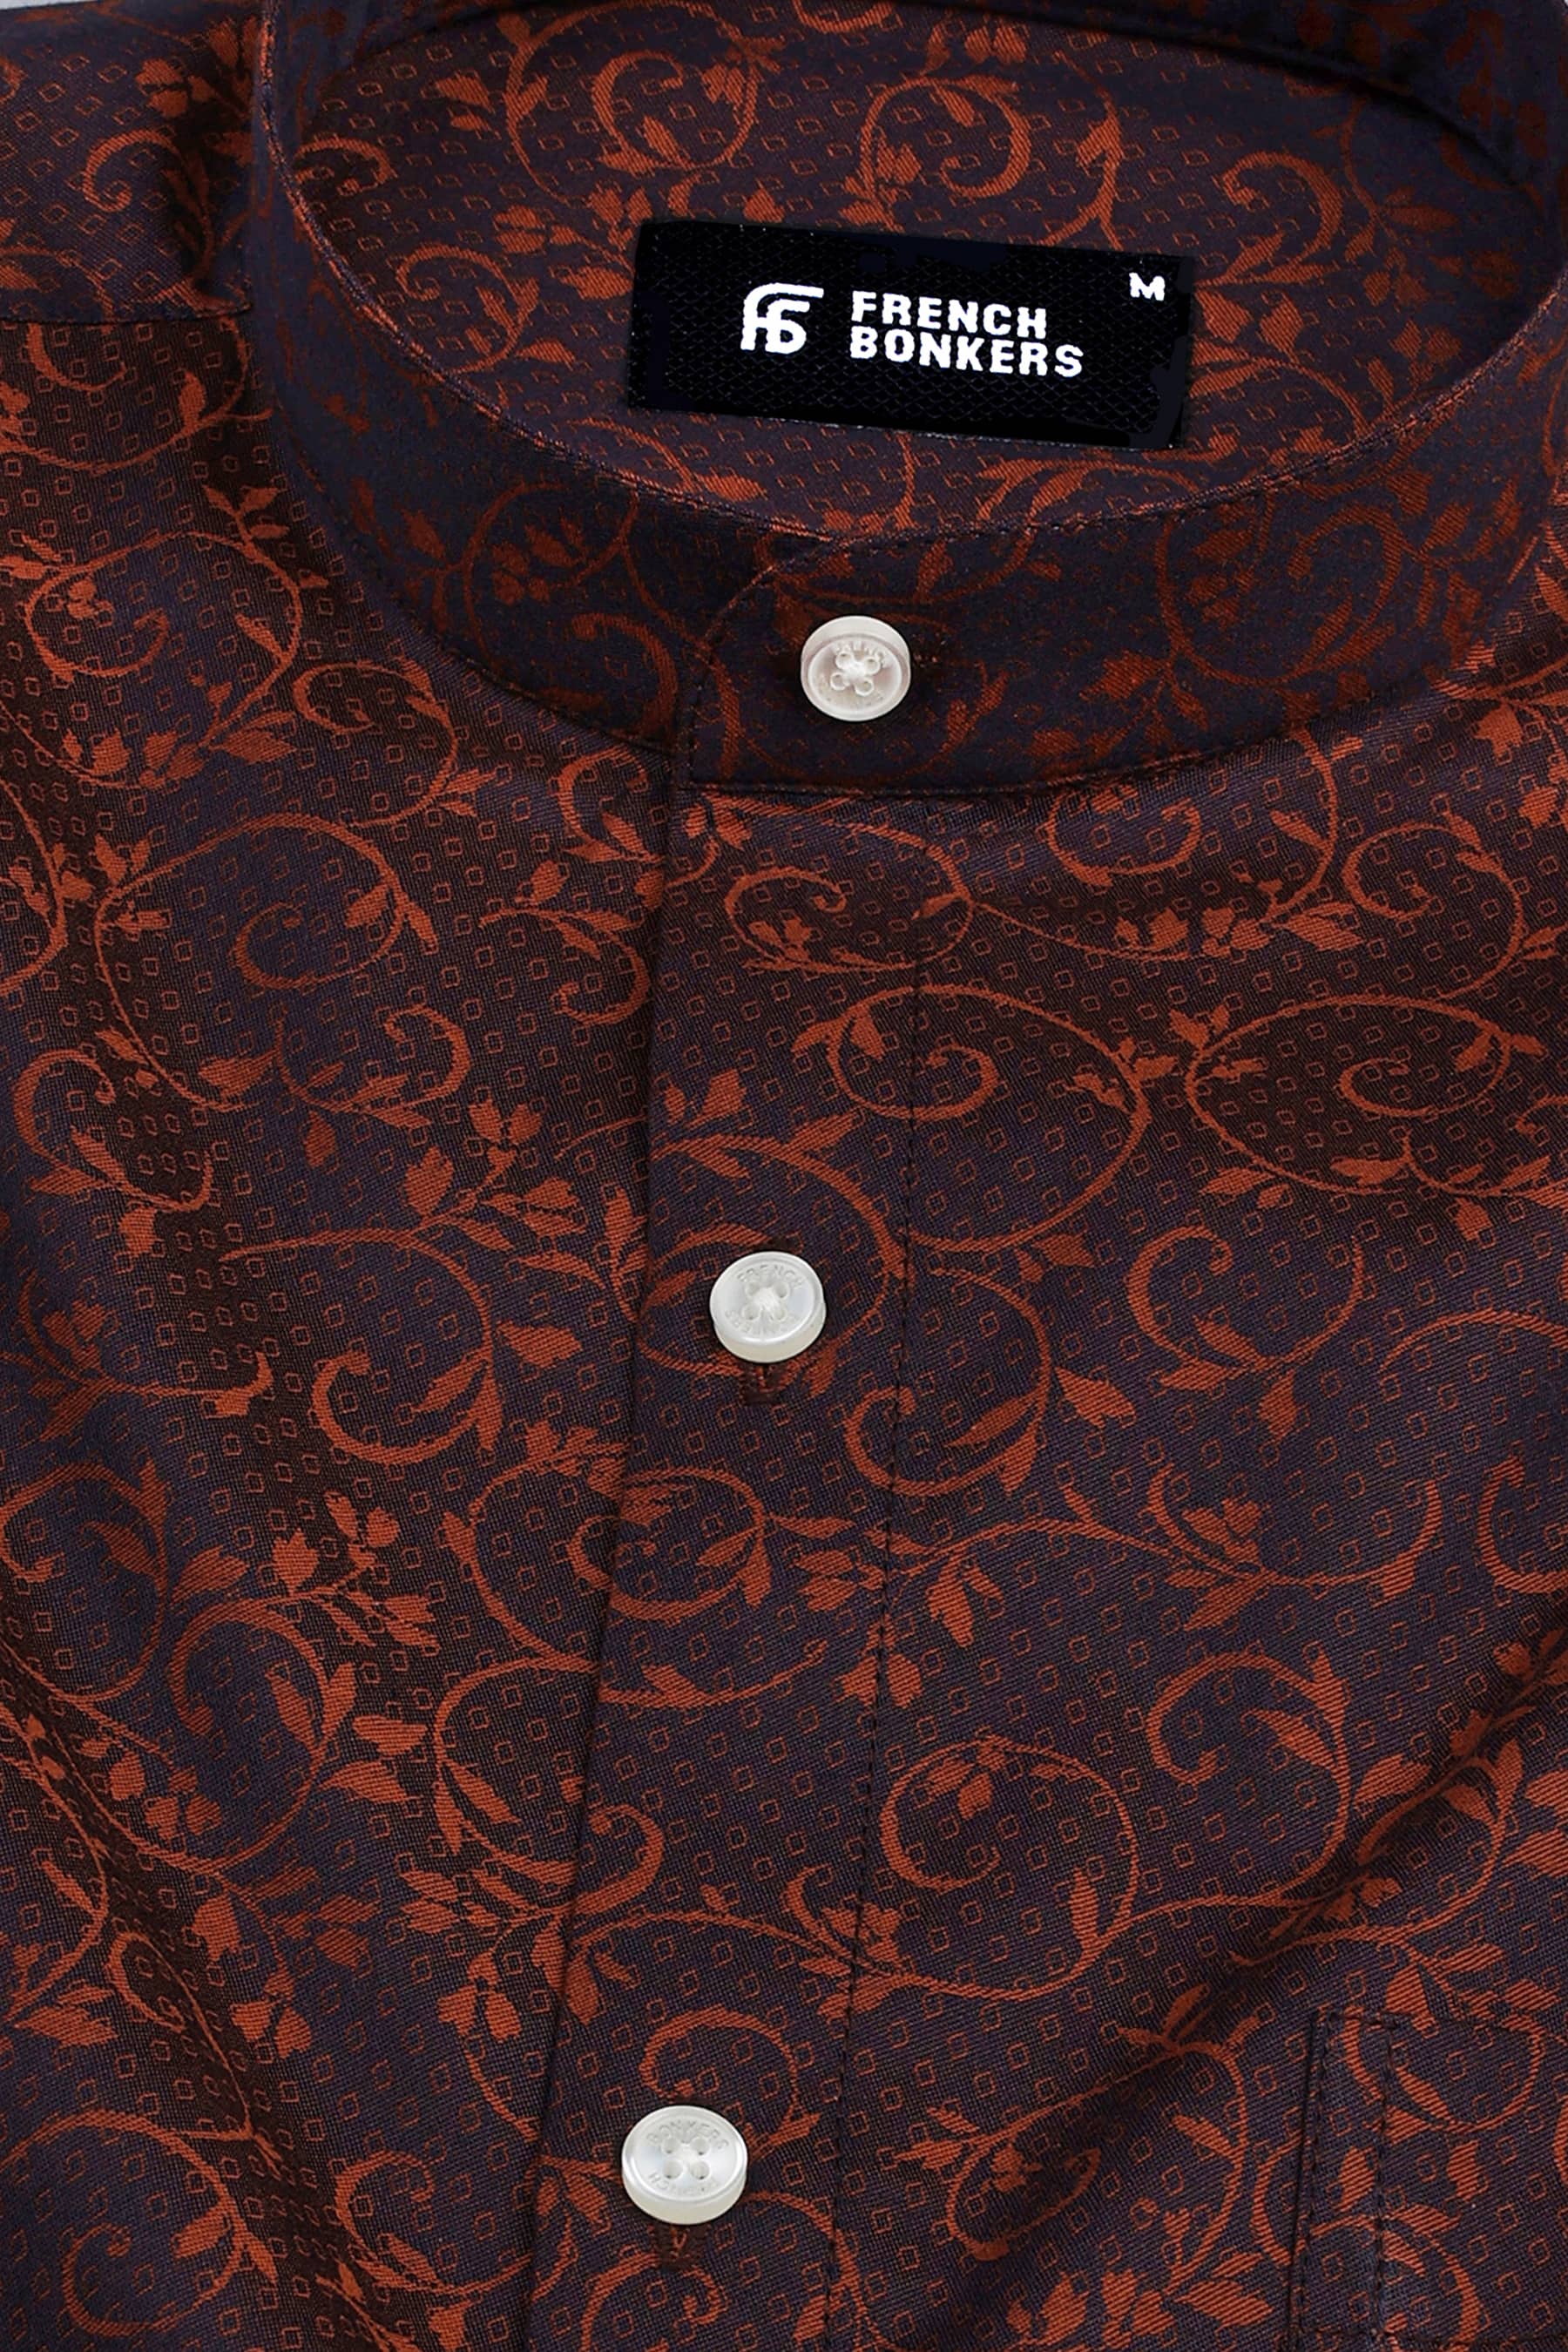 Caramal and brunette brown jacquard printed shirt